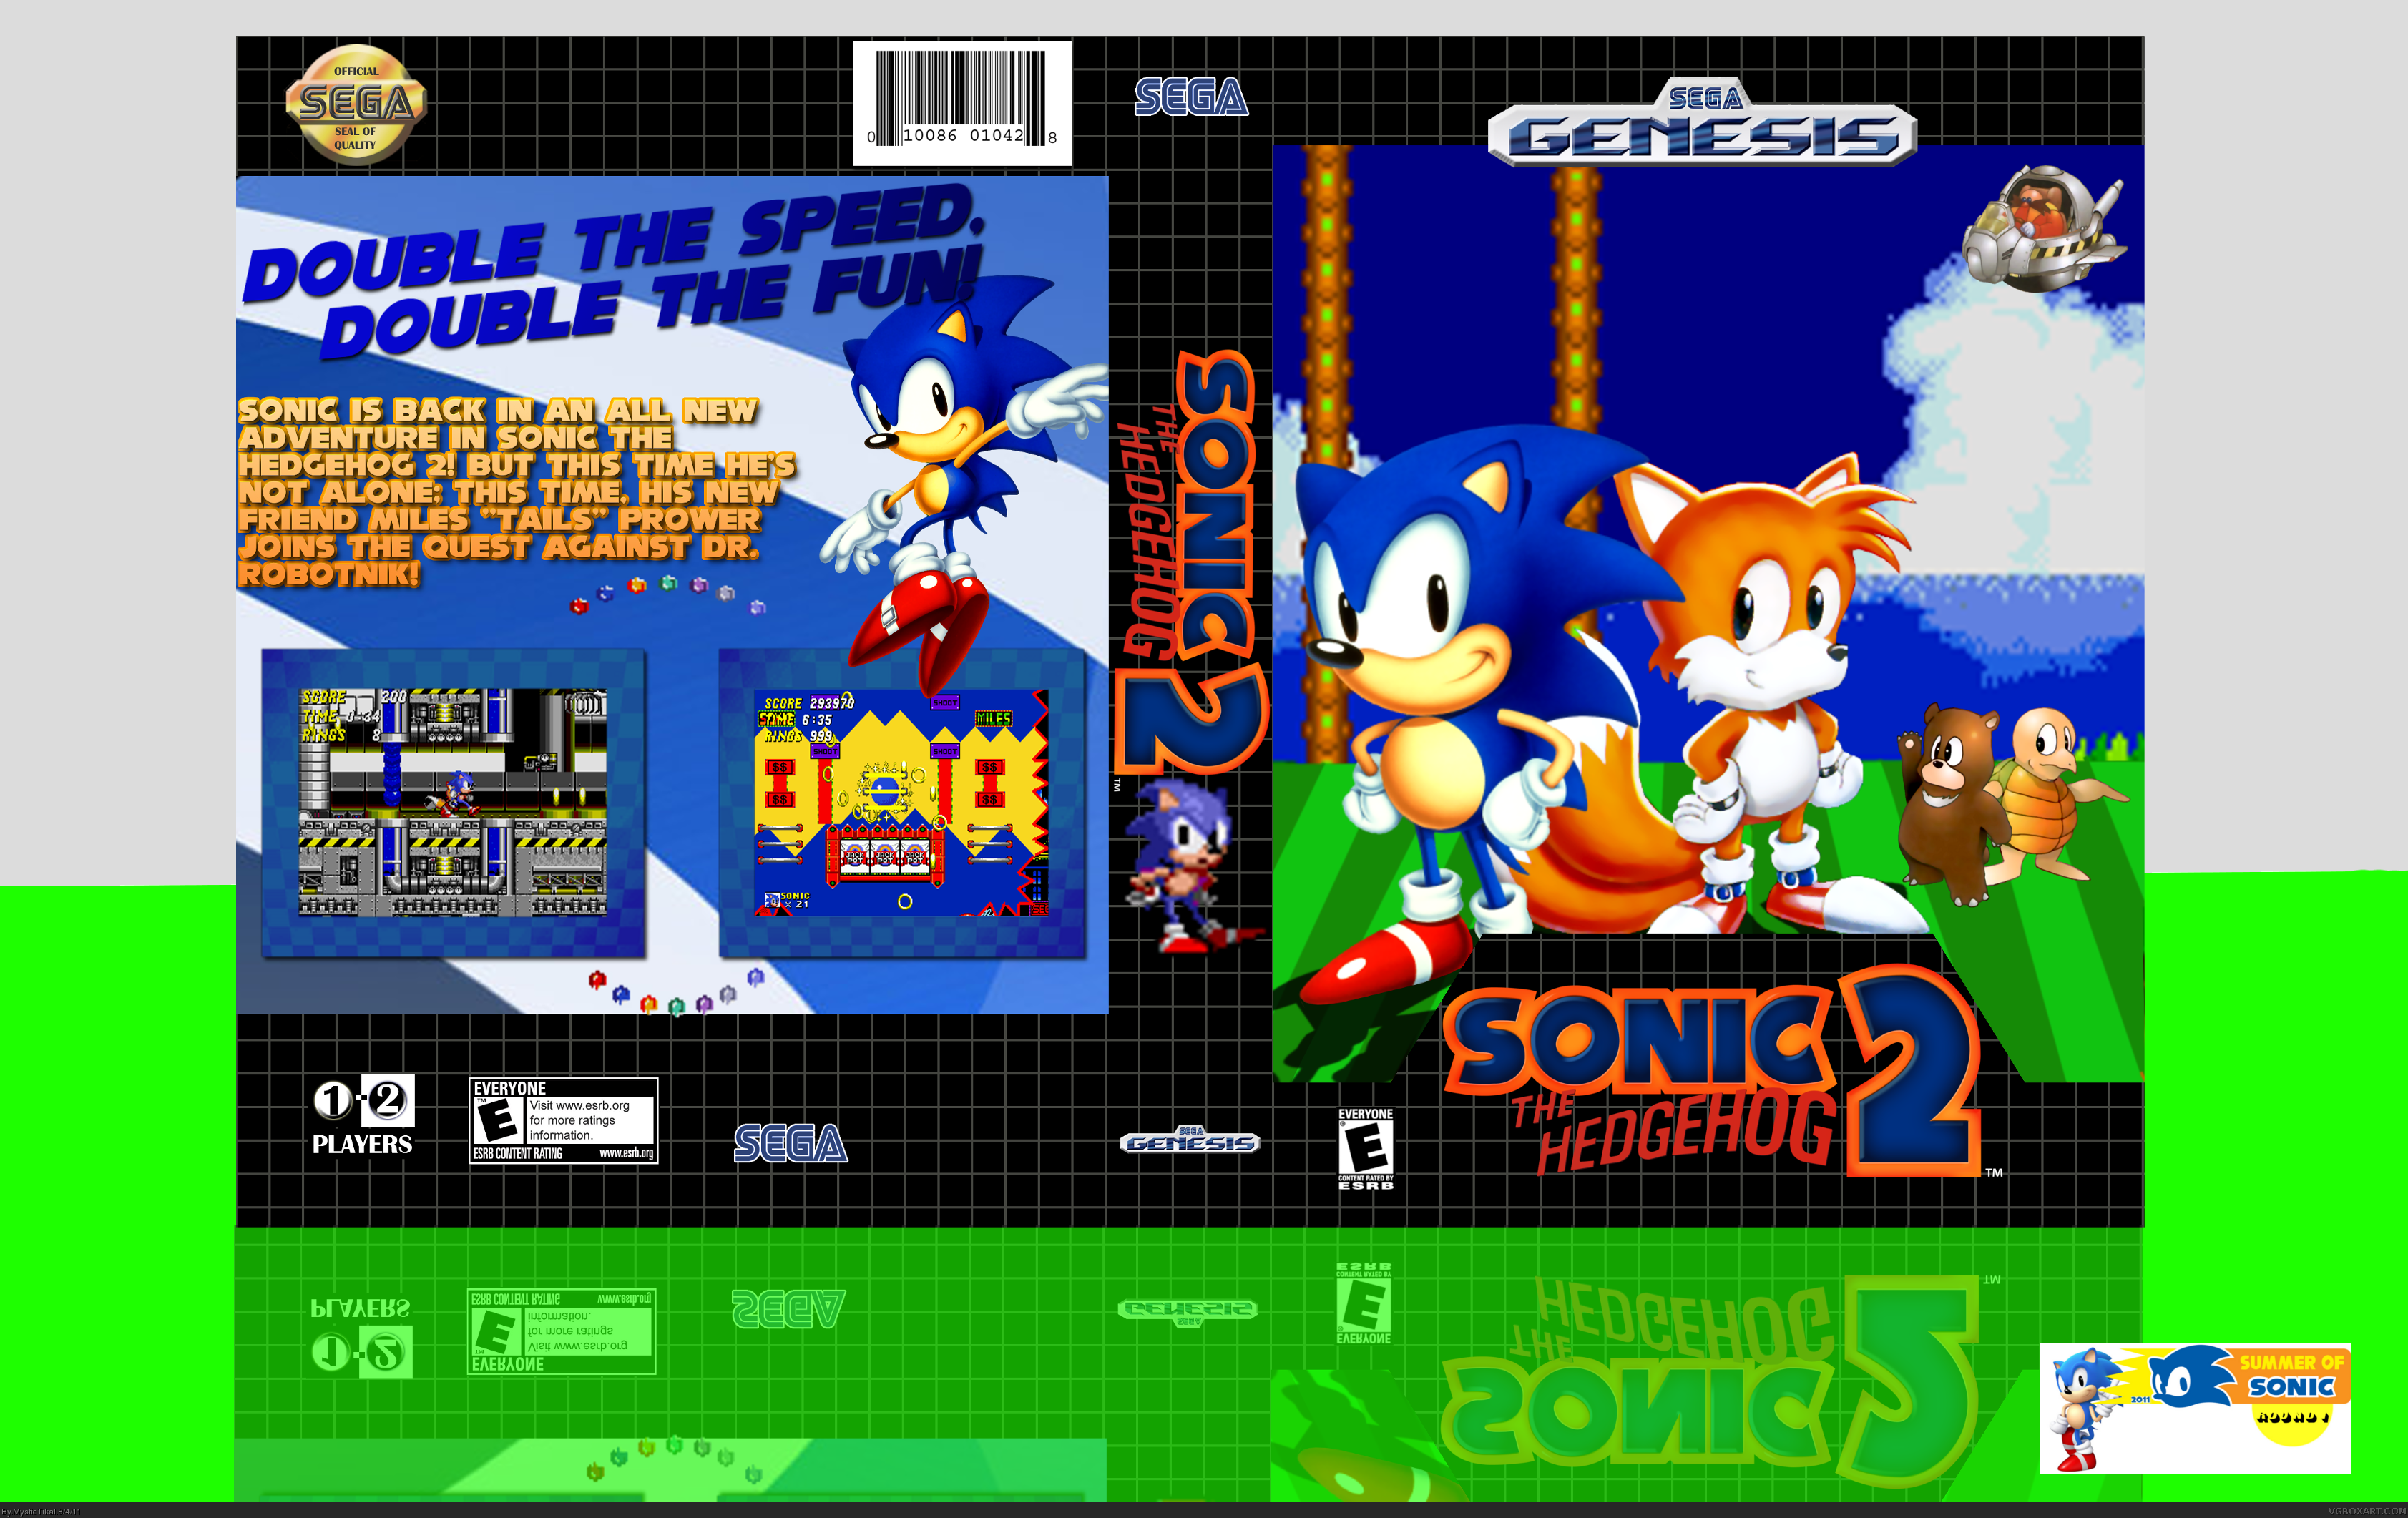 Игры соник 2 сега. Sega Genesis Sonic 2 коробка. Sonic 2 Genesis обложка. Sonic the Hedgehog 2 обложка. Sonic the Hedgehog Sega Genesis Cover.